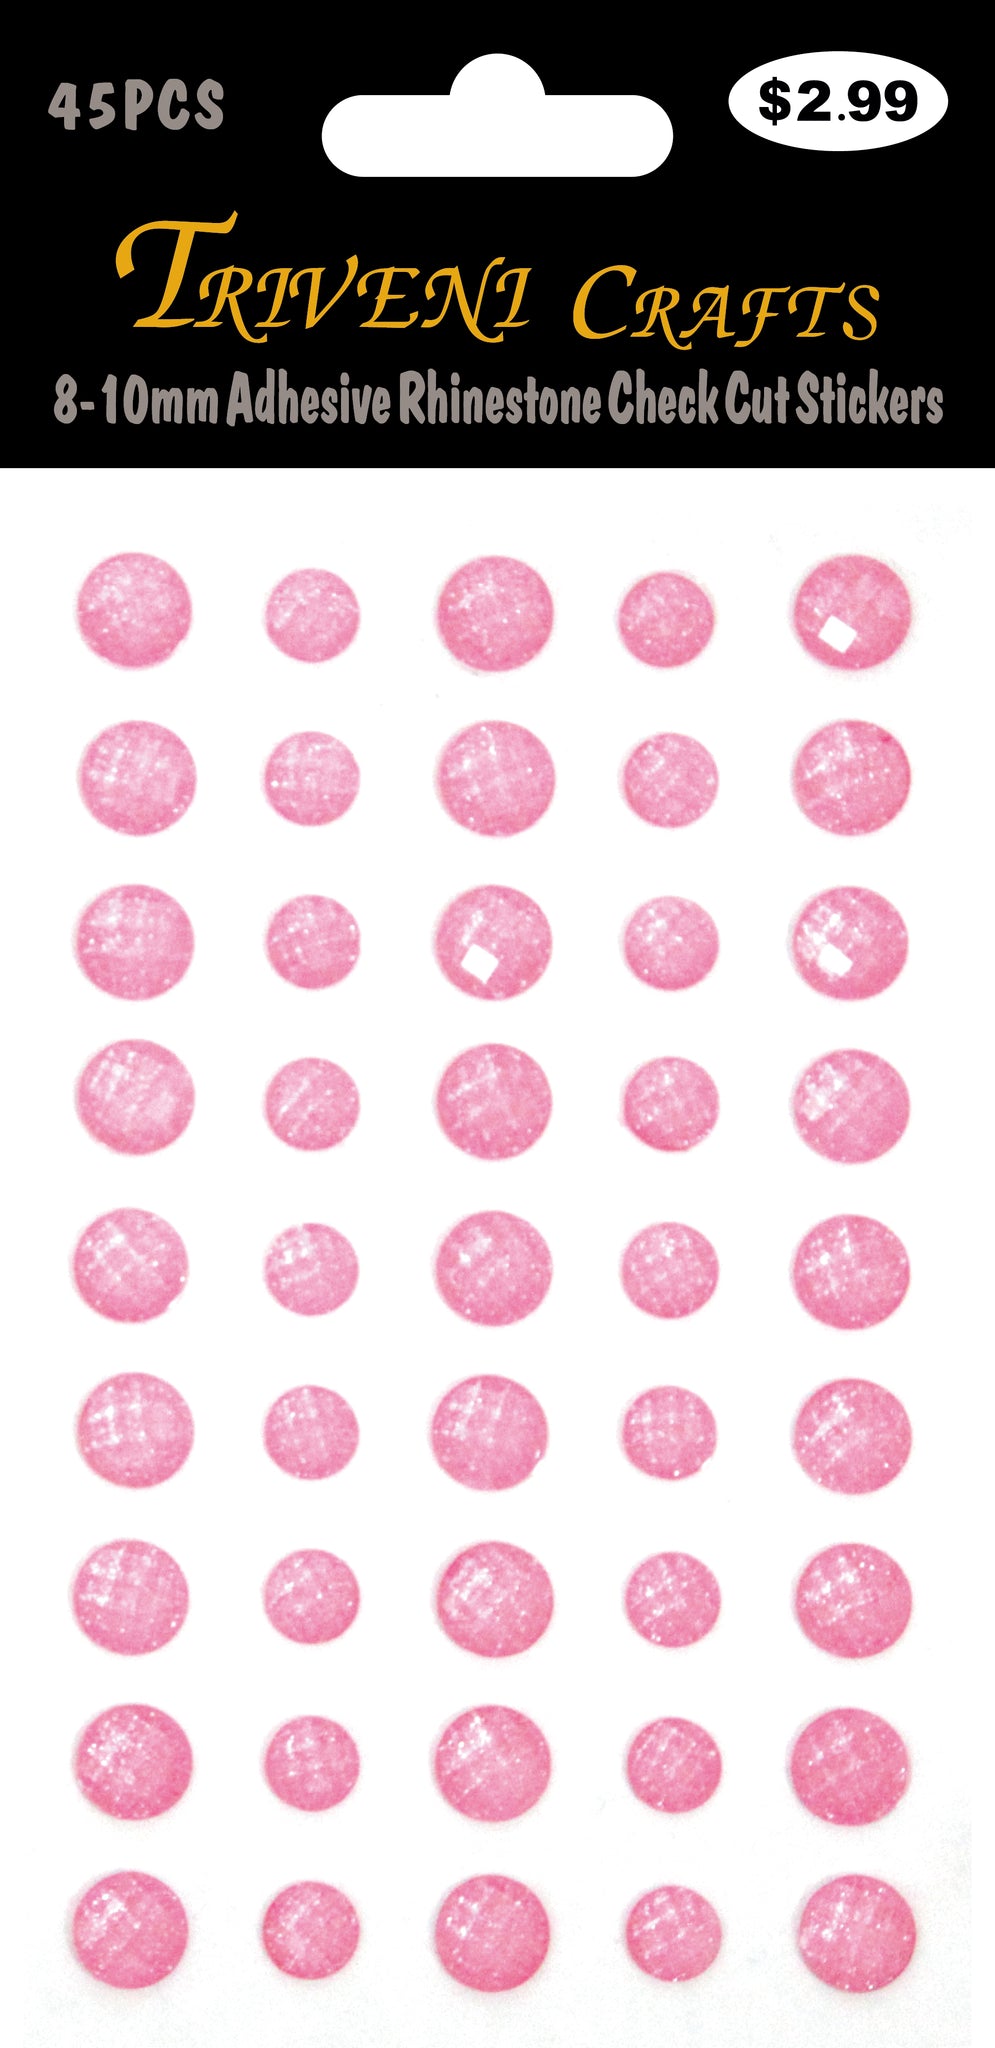 8-10mm Adhesive Rhinestone Check Cut Stickers - Pink